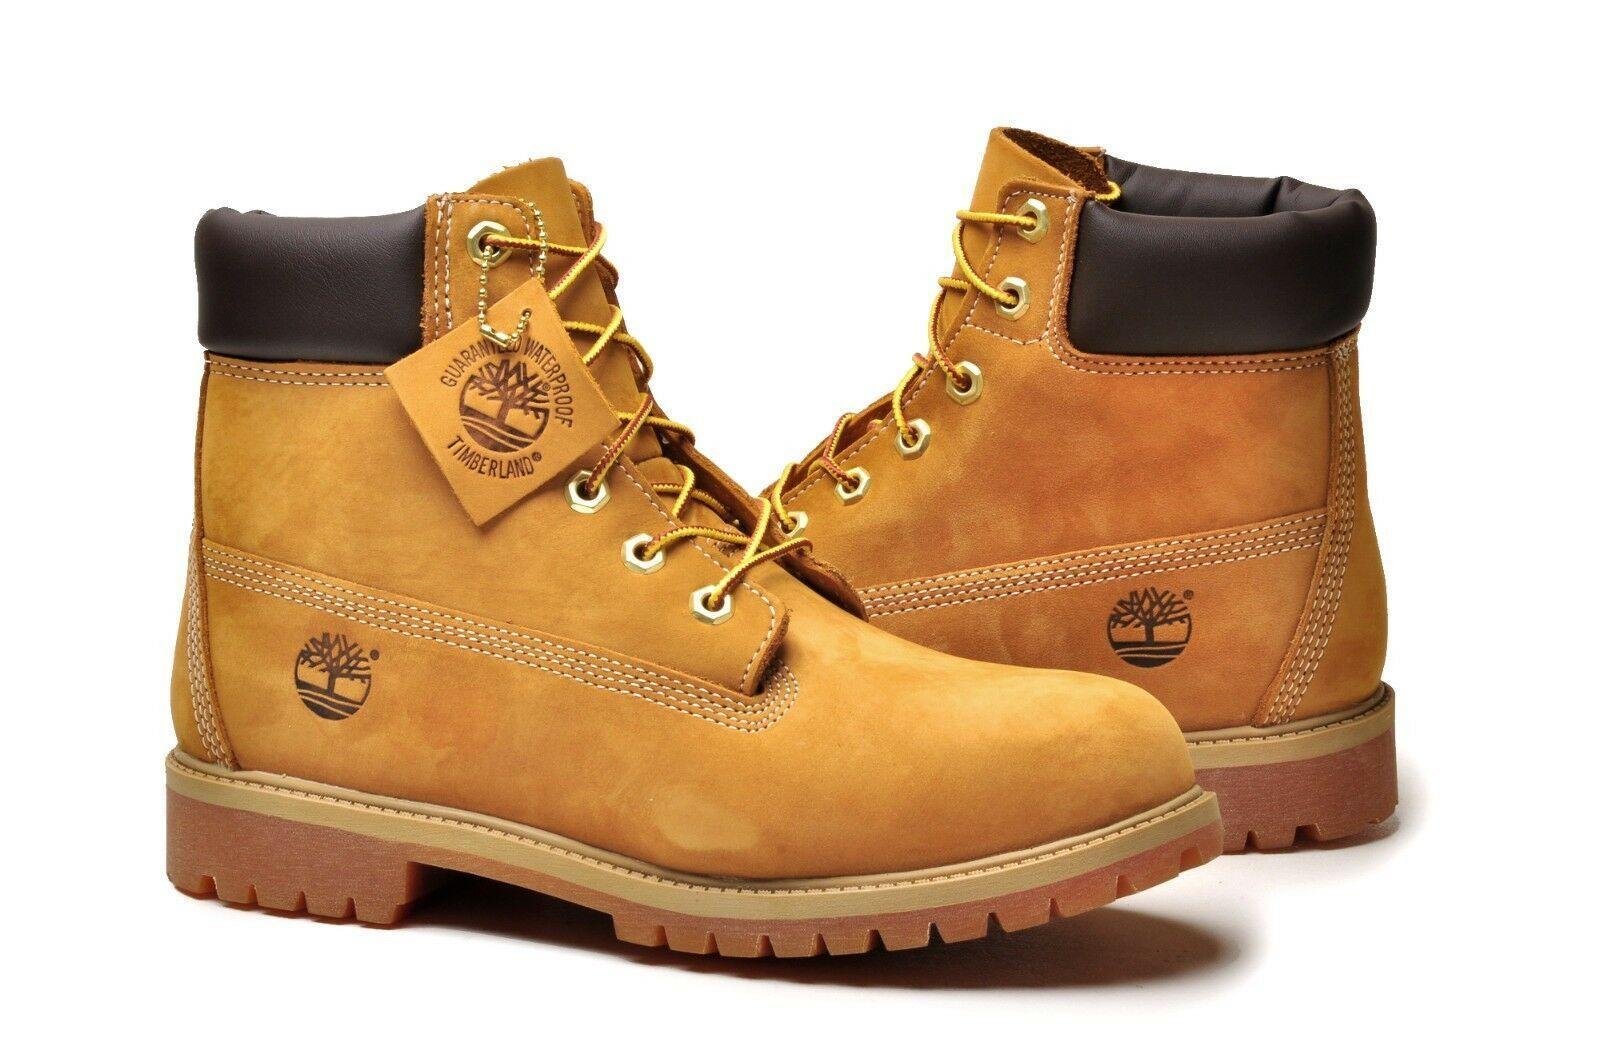 Timberland Womens Premium 6"" Waterproof Leather Boots Shoes - Wheat Nubuck - US 9